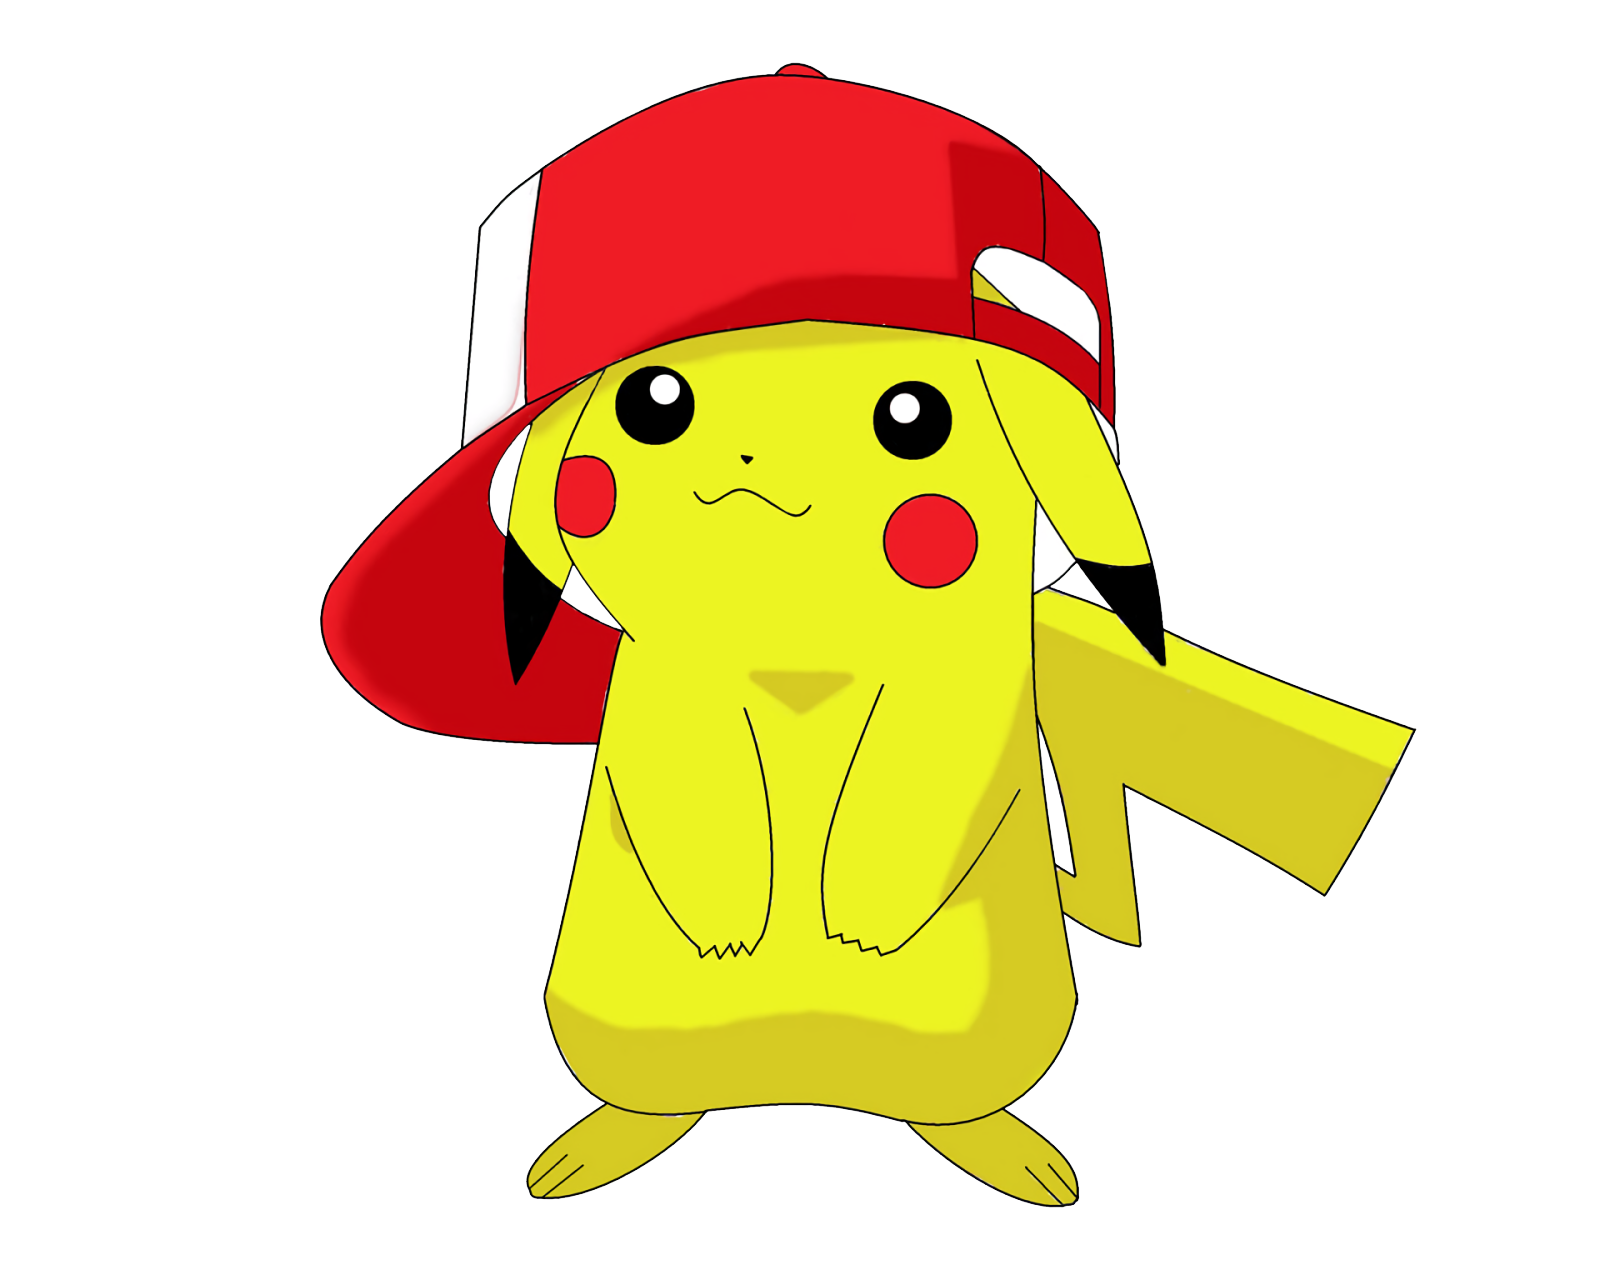 Transparent free download pngmart. Pokemon png images